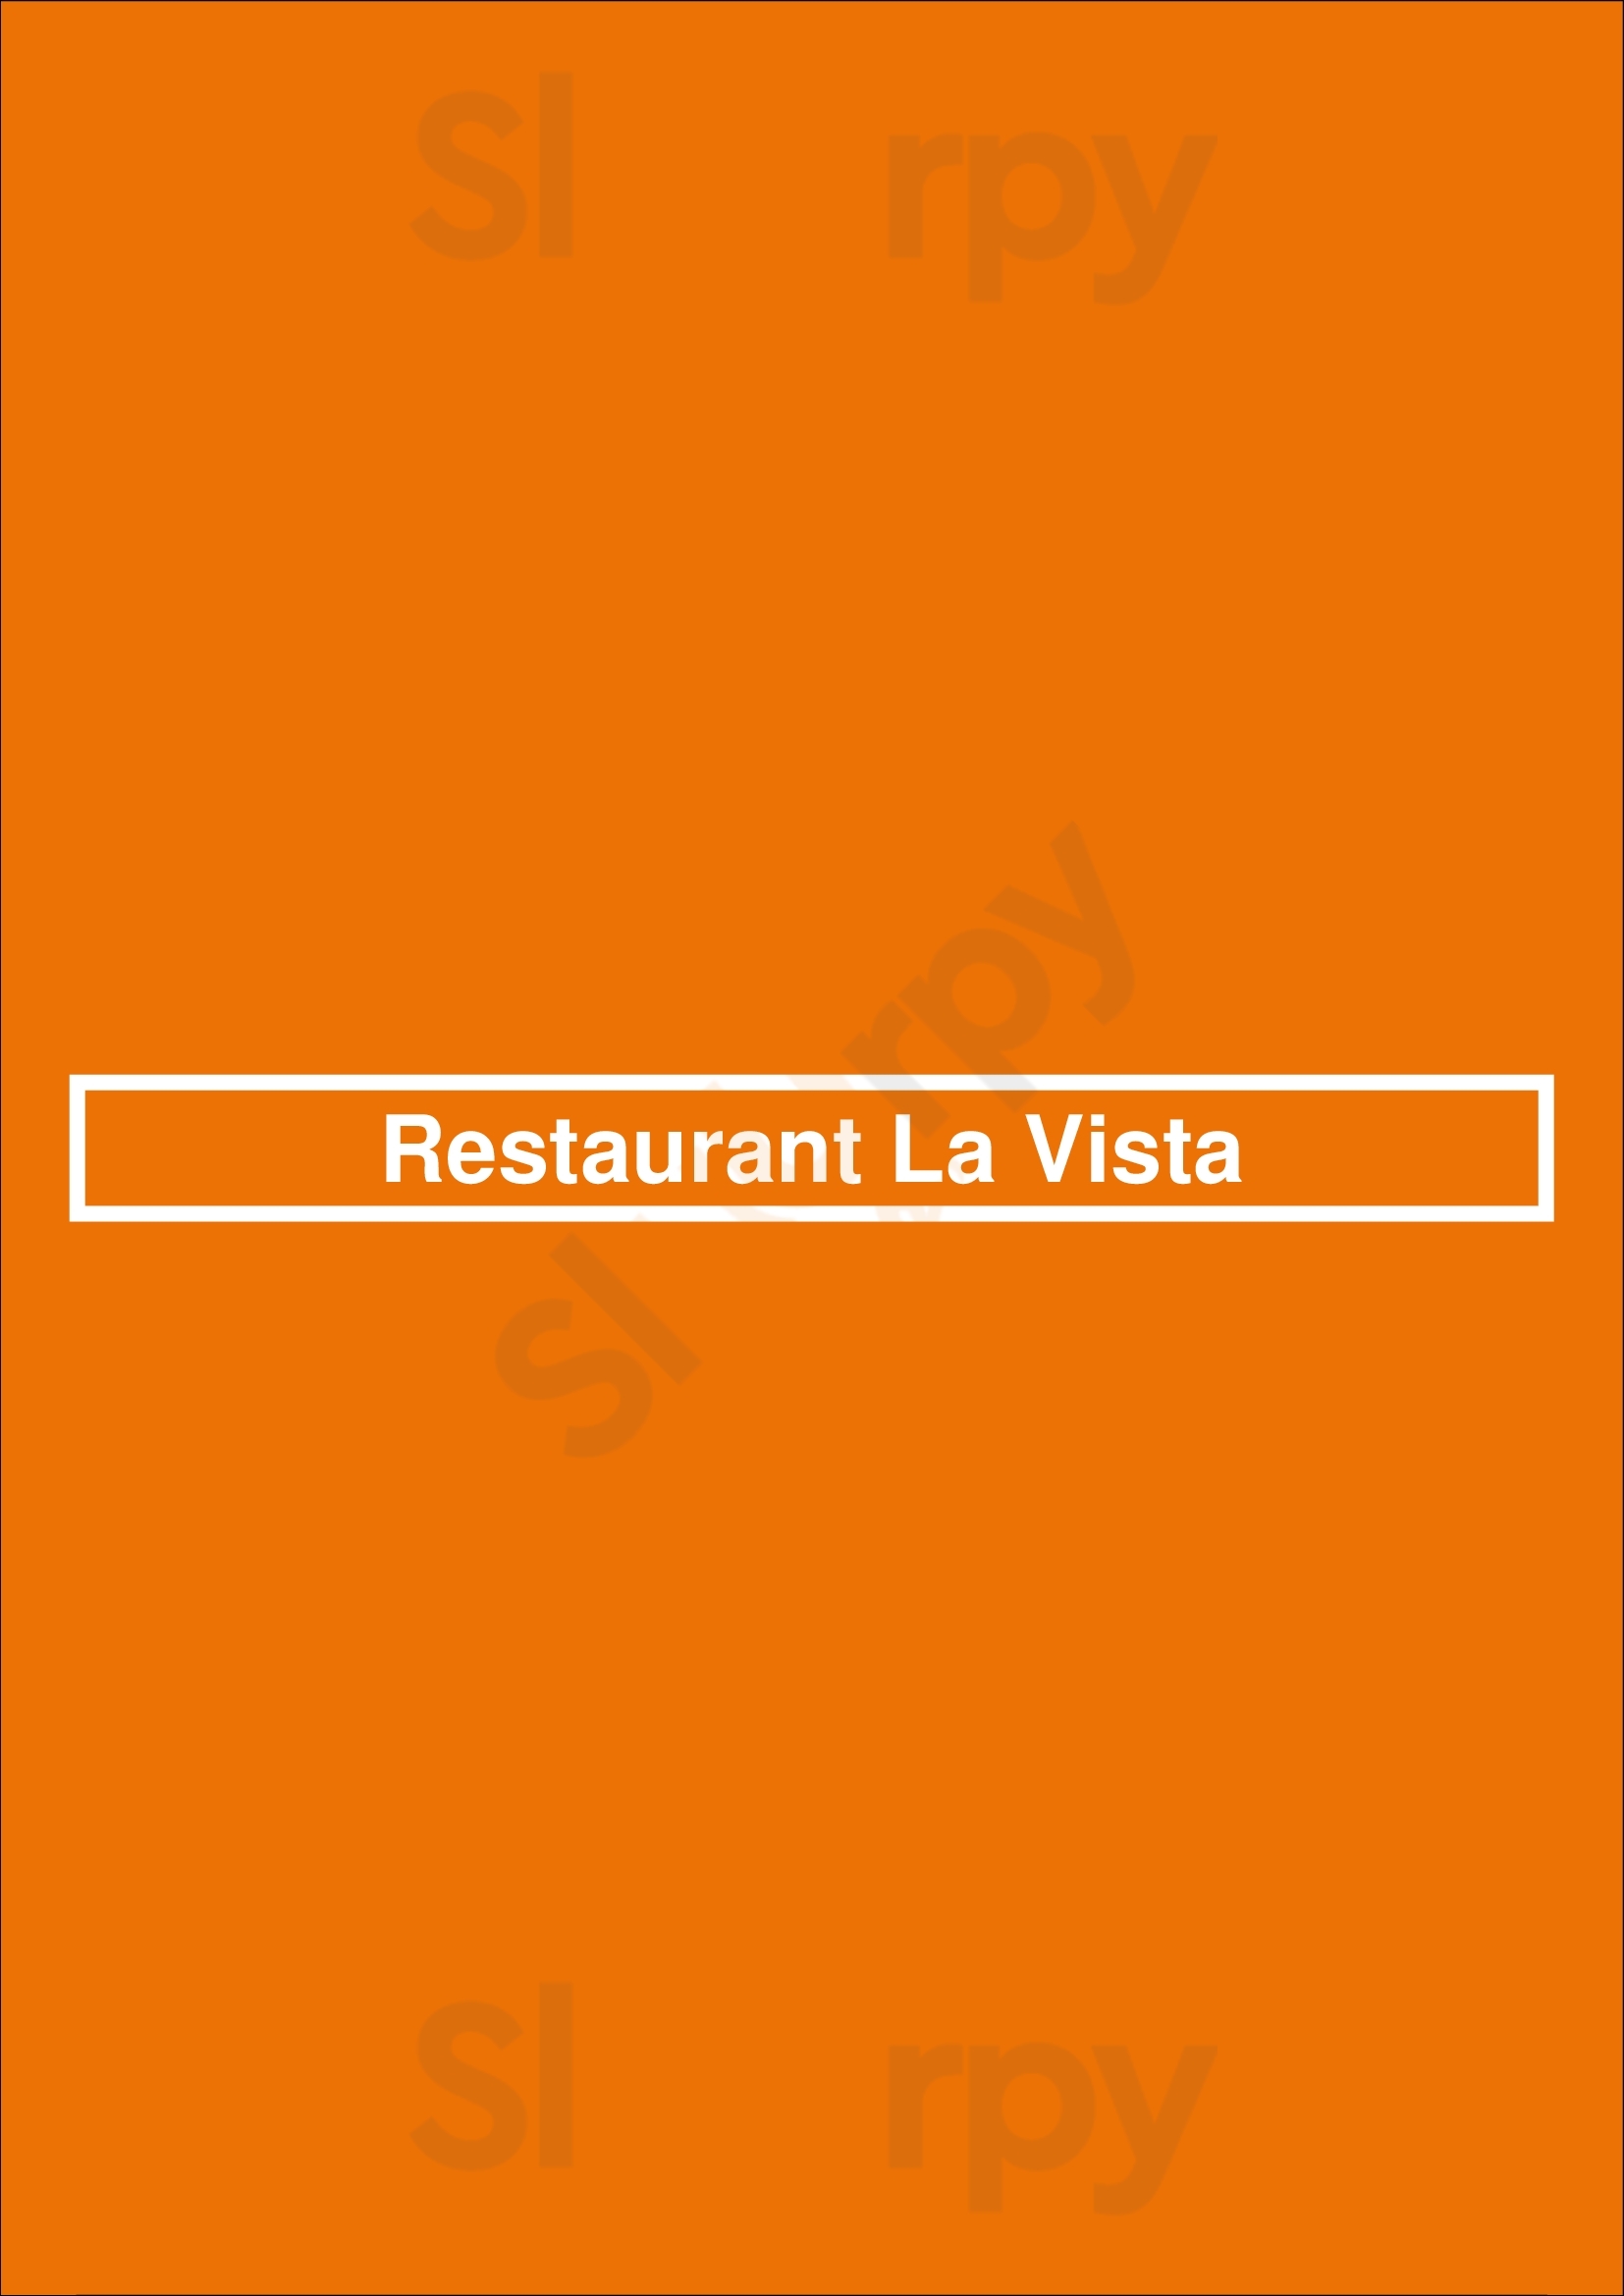 Restaurant La Vista Malines Menu - 1